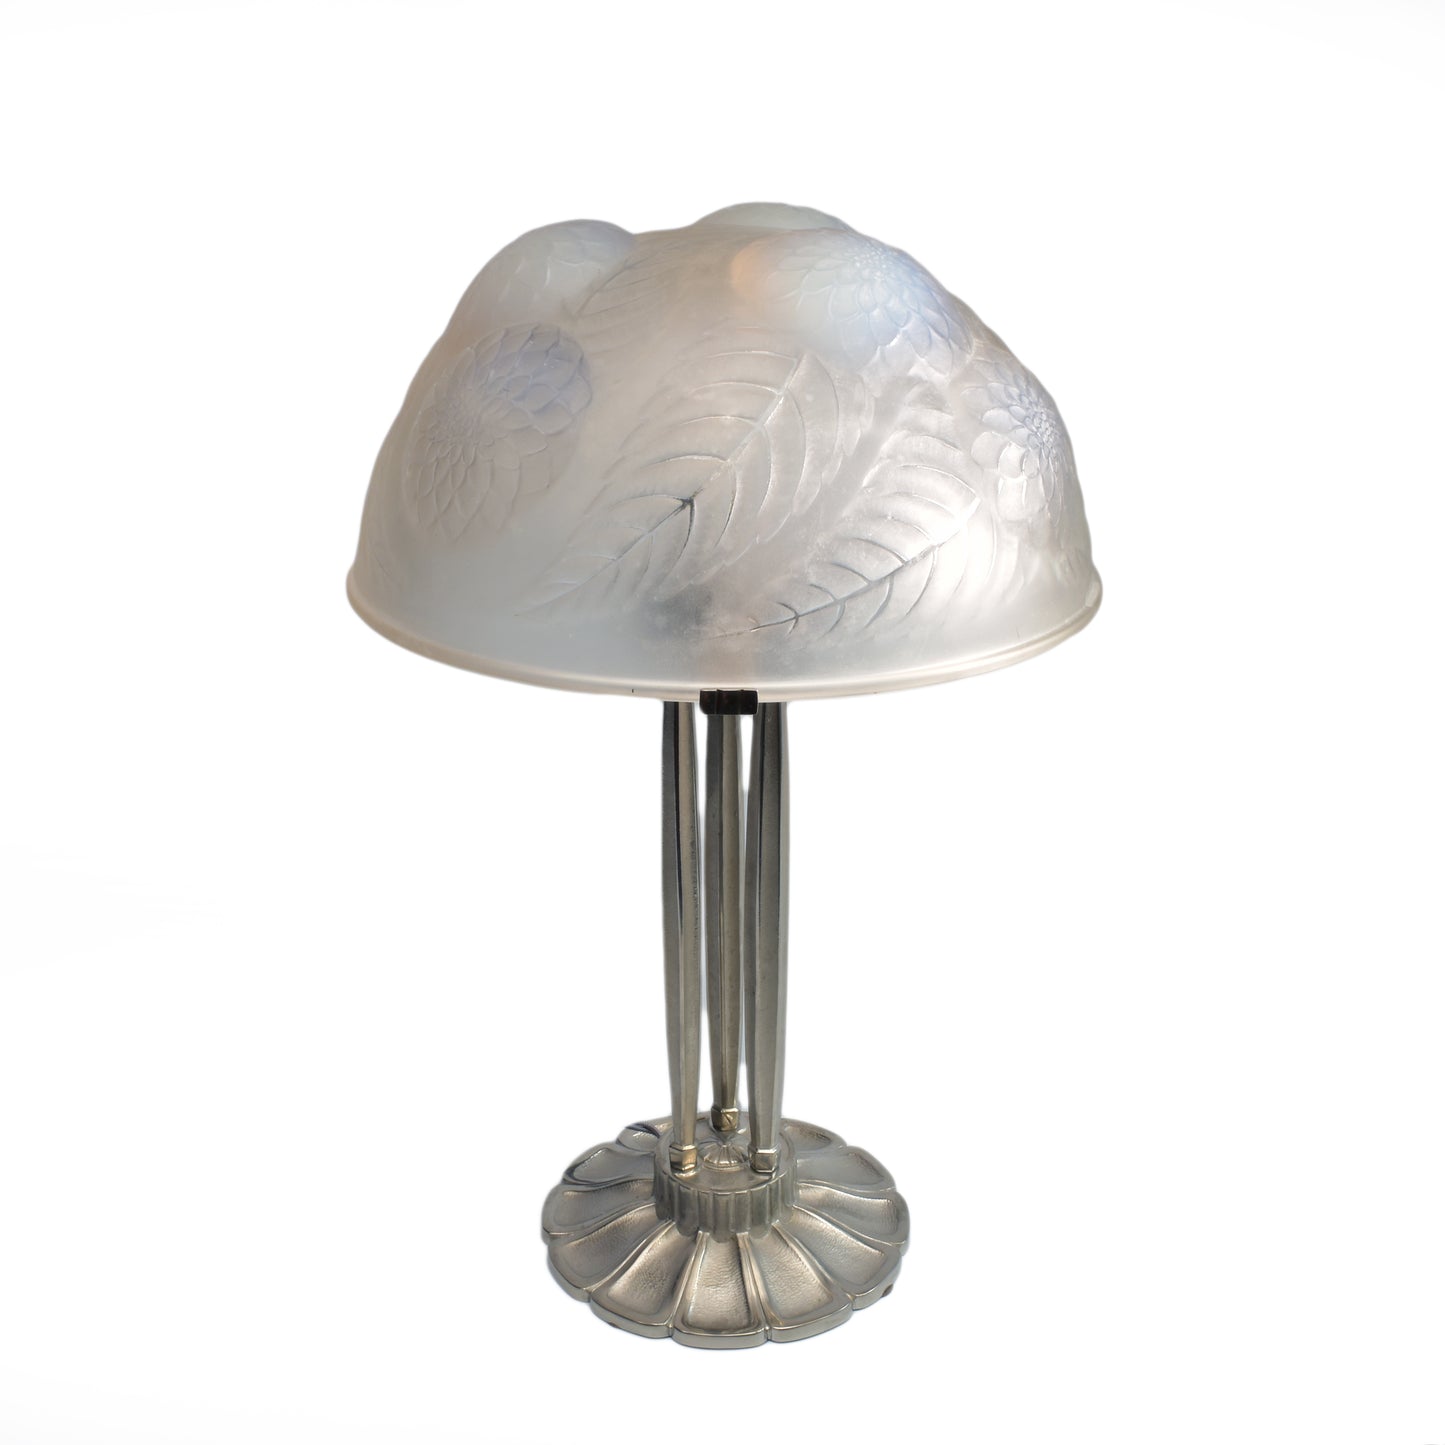 Dahlia lamp